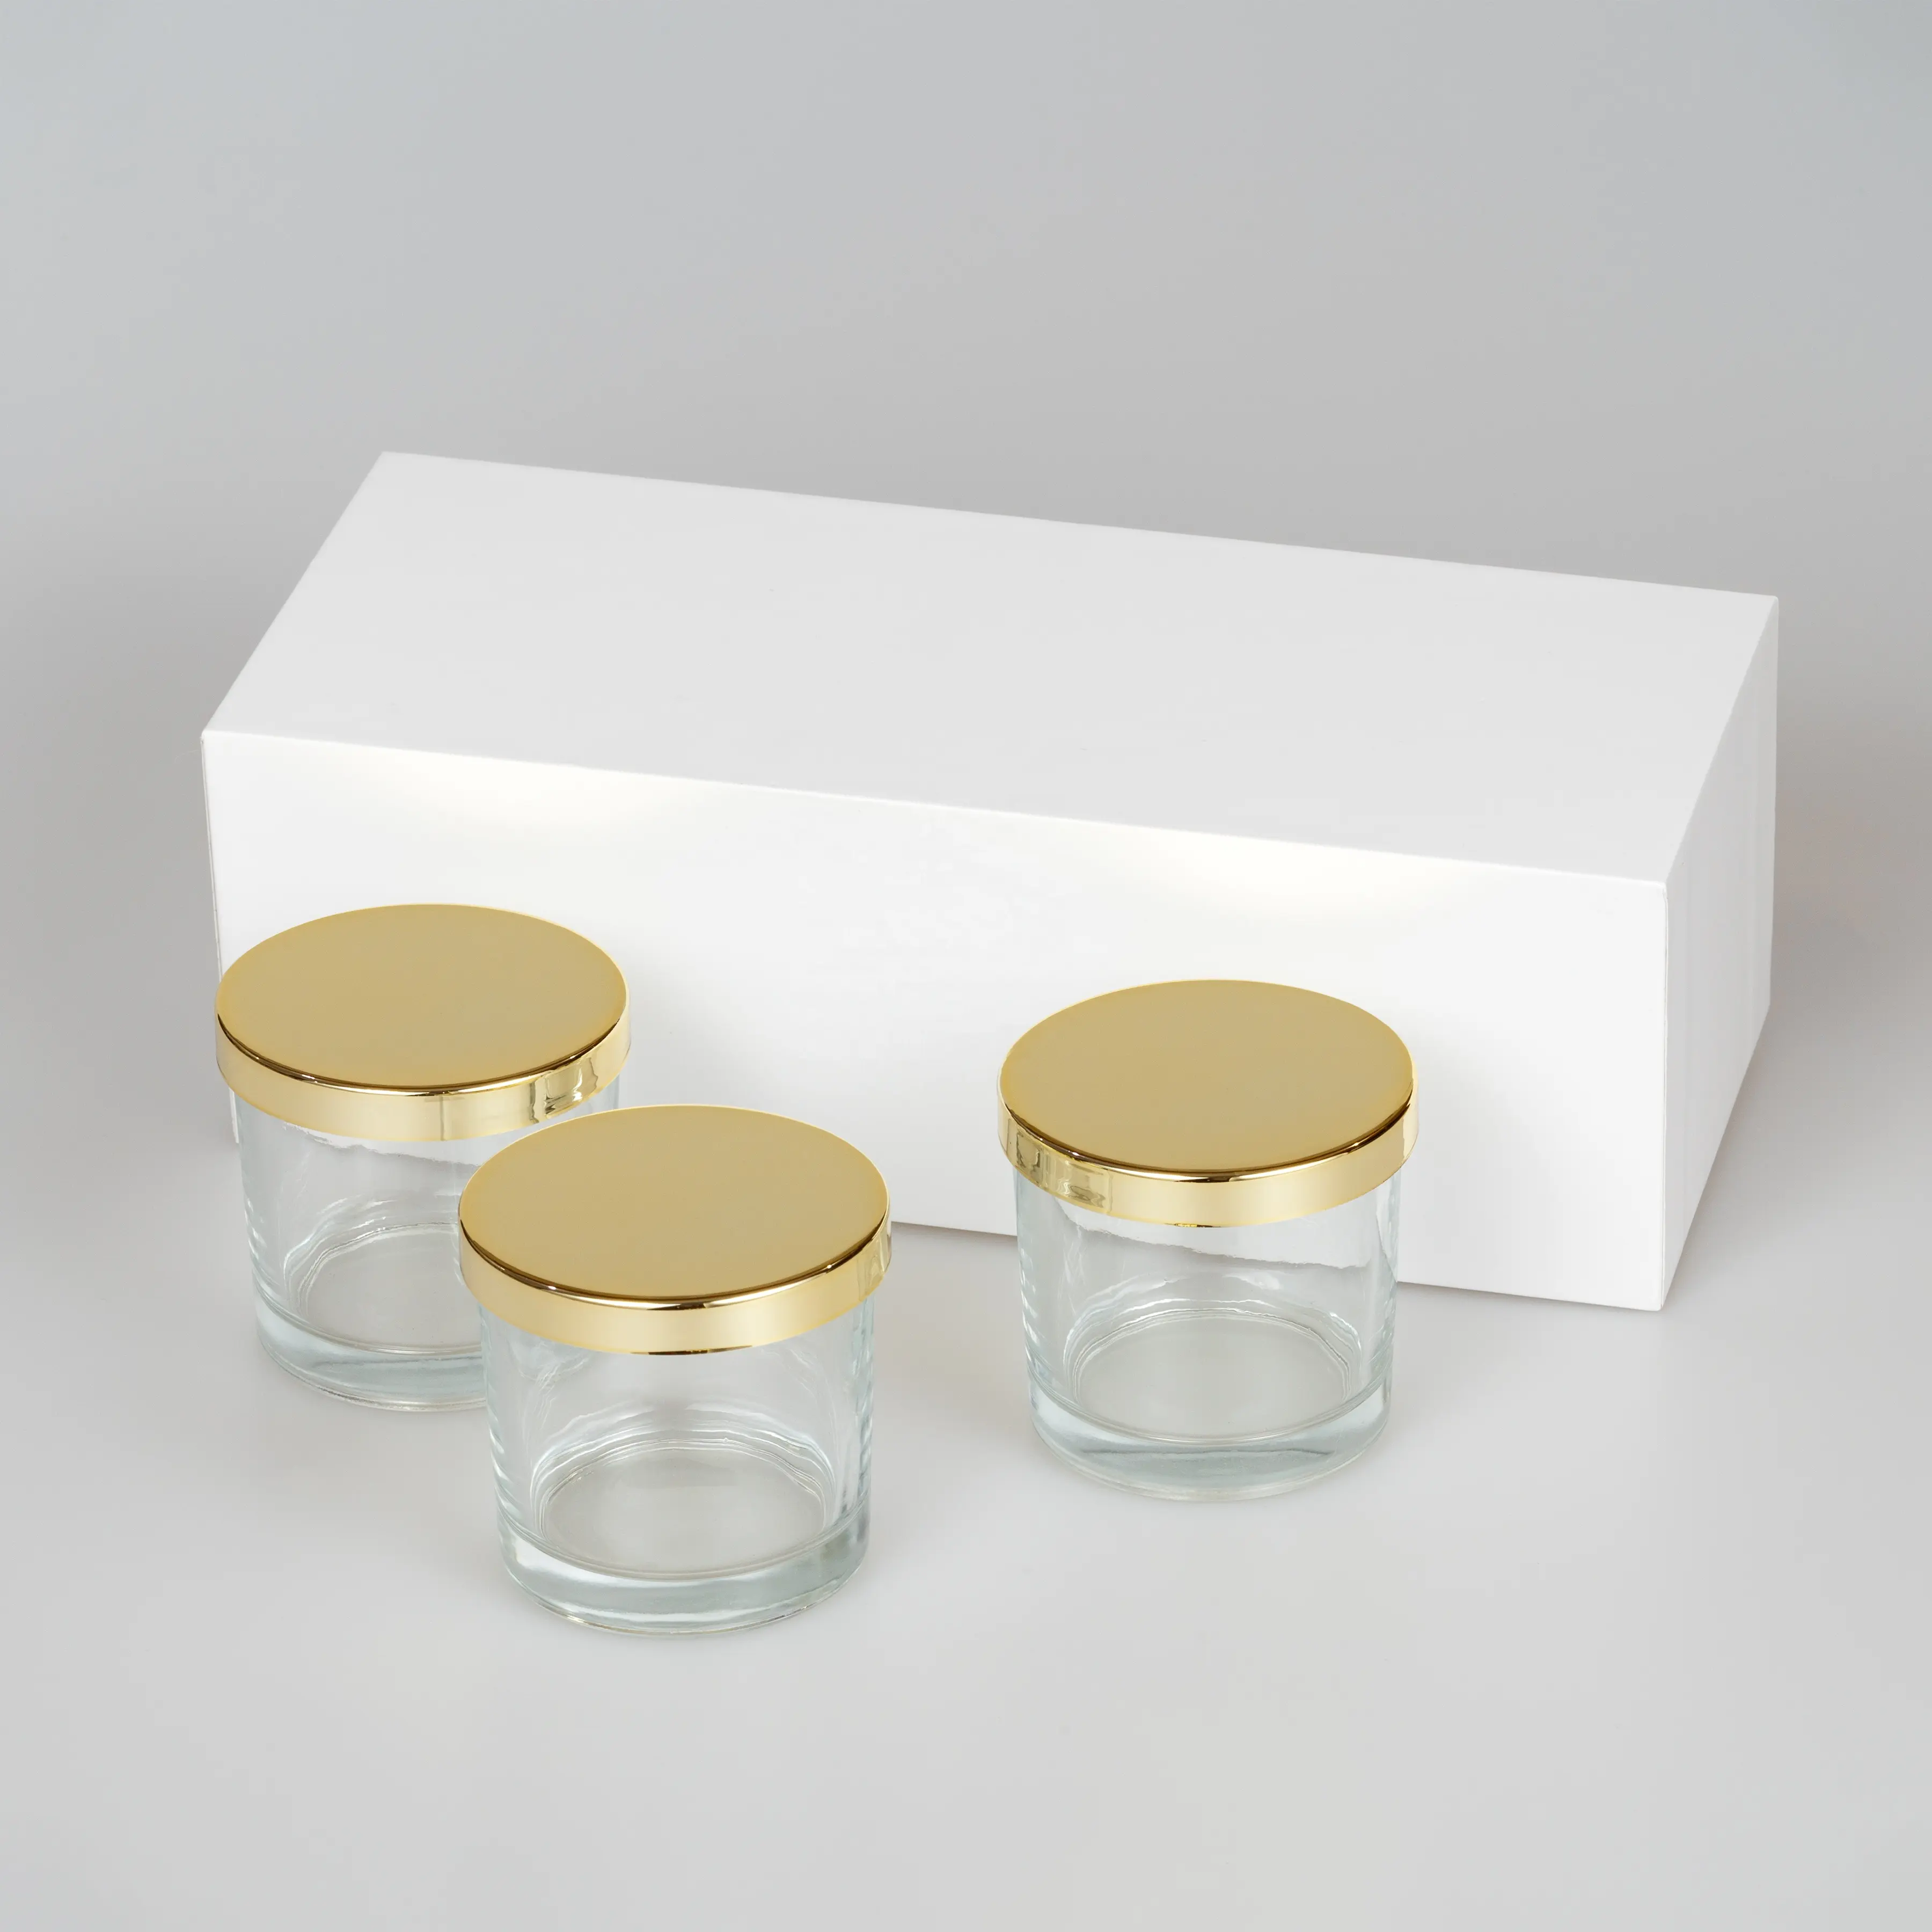 2,3 Unzen Kerzen glas Leeres Glas mit goldenem Metall deckel und Schachteln